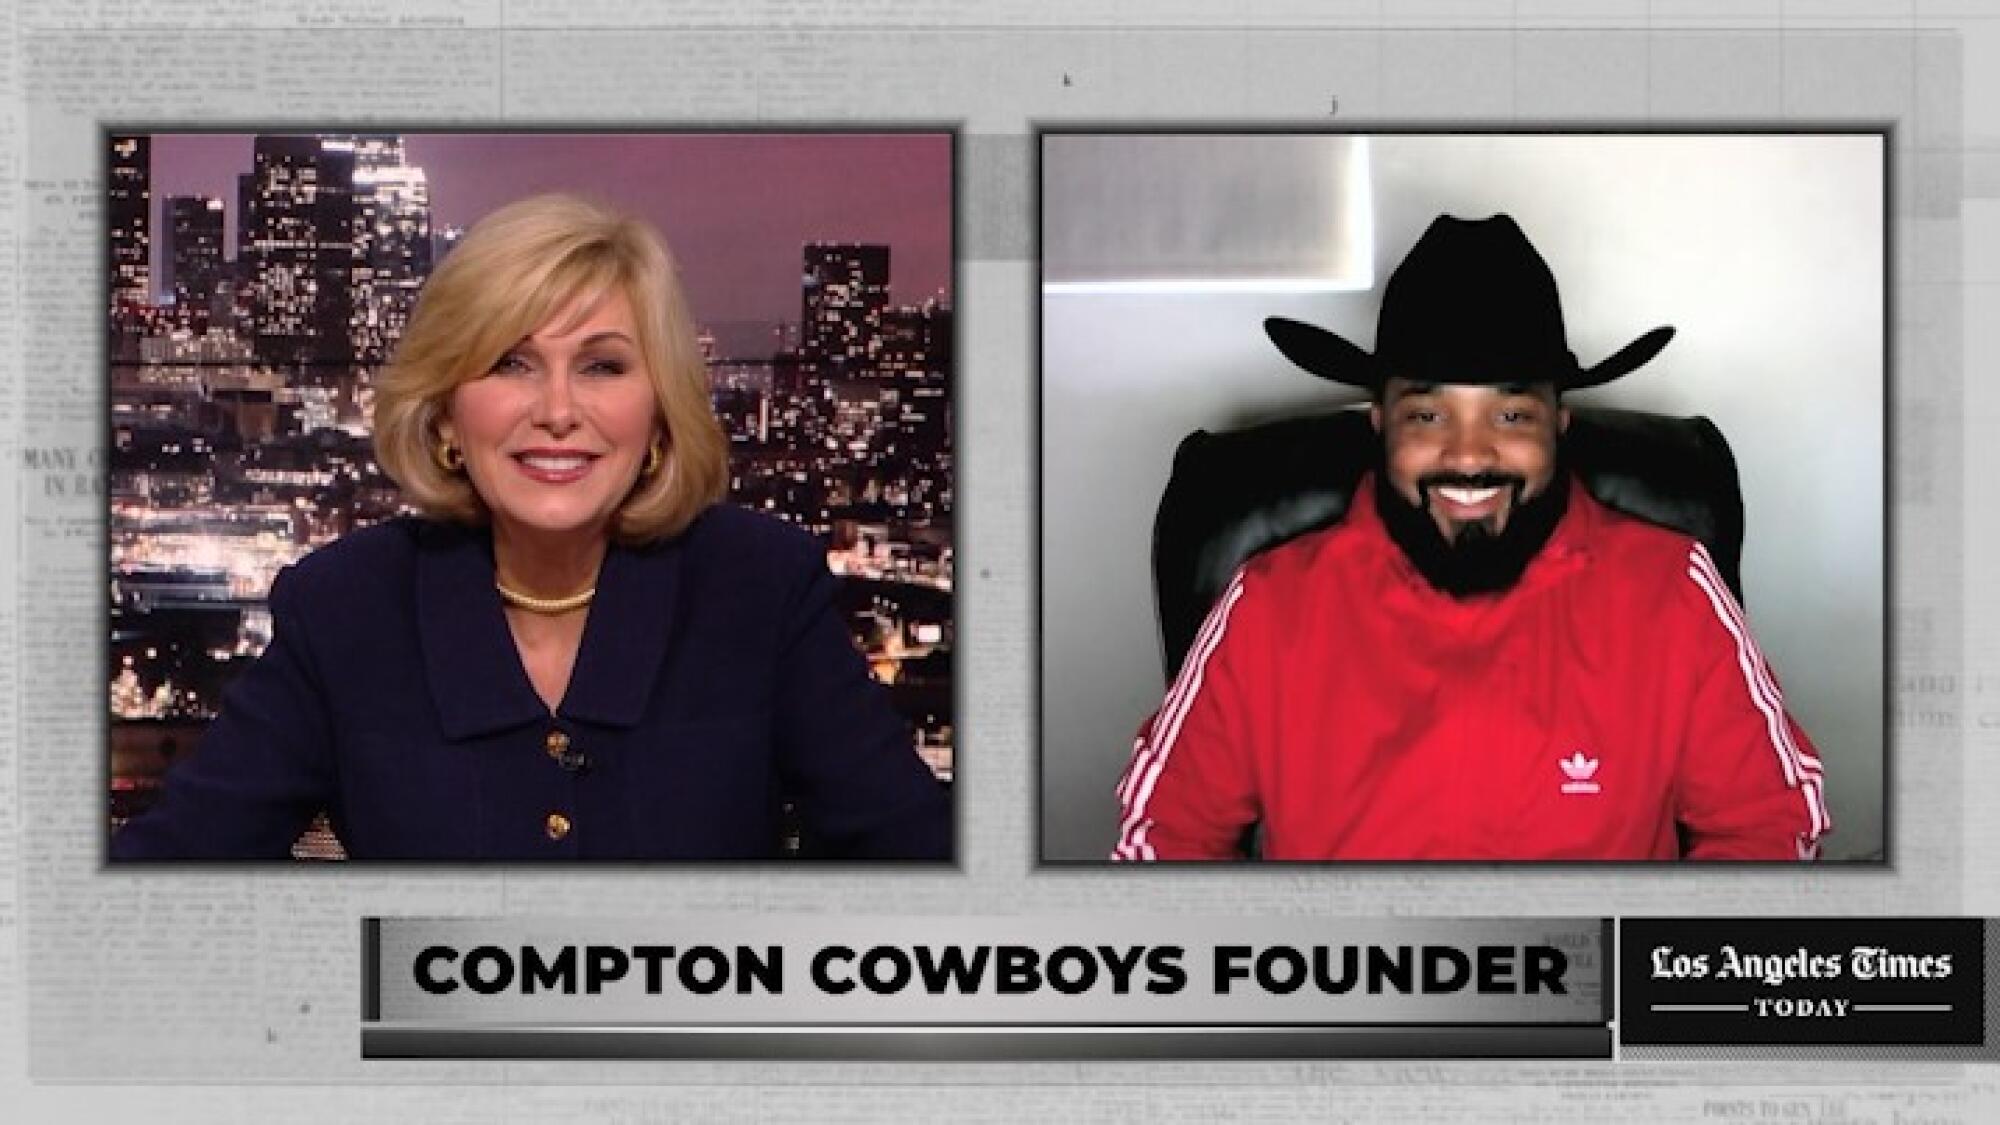 LA Times Today: Compton Cowboys founder Randy Savvy - Los Angeles Times